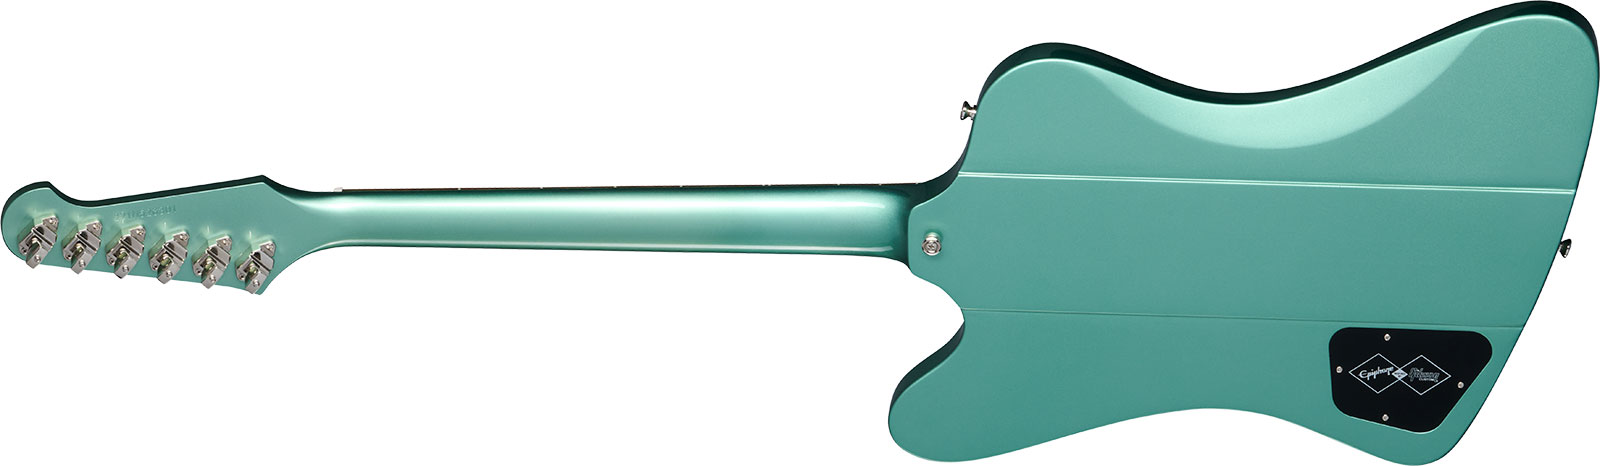 Epiphone Firebird I 1963 Inspired By Gibson Custom 1mh Ht Lau - Inverness Green - Retro-Rock-E-Gitarre - Variation 1